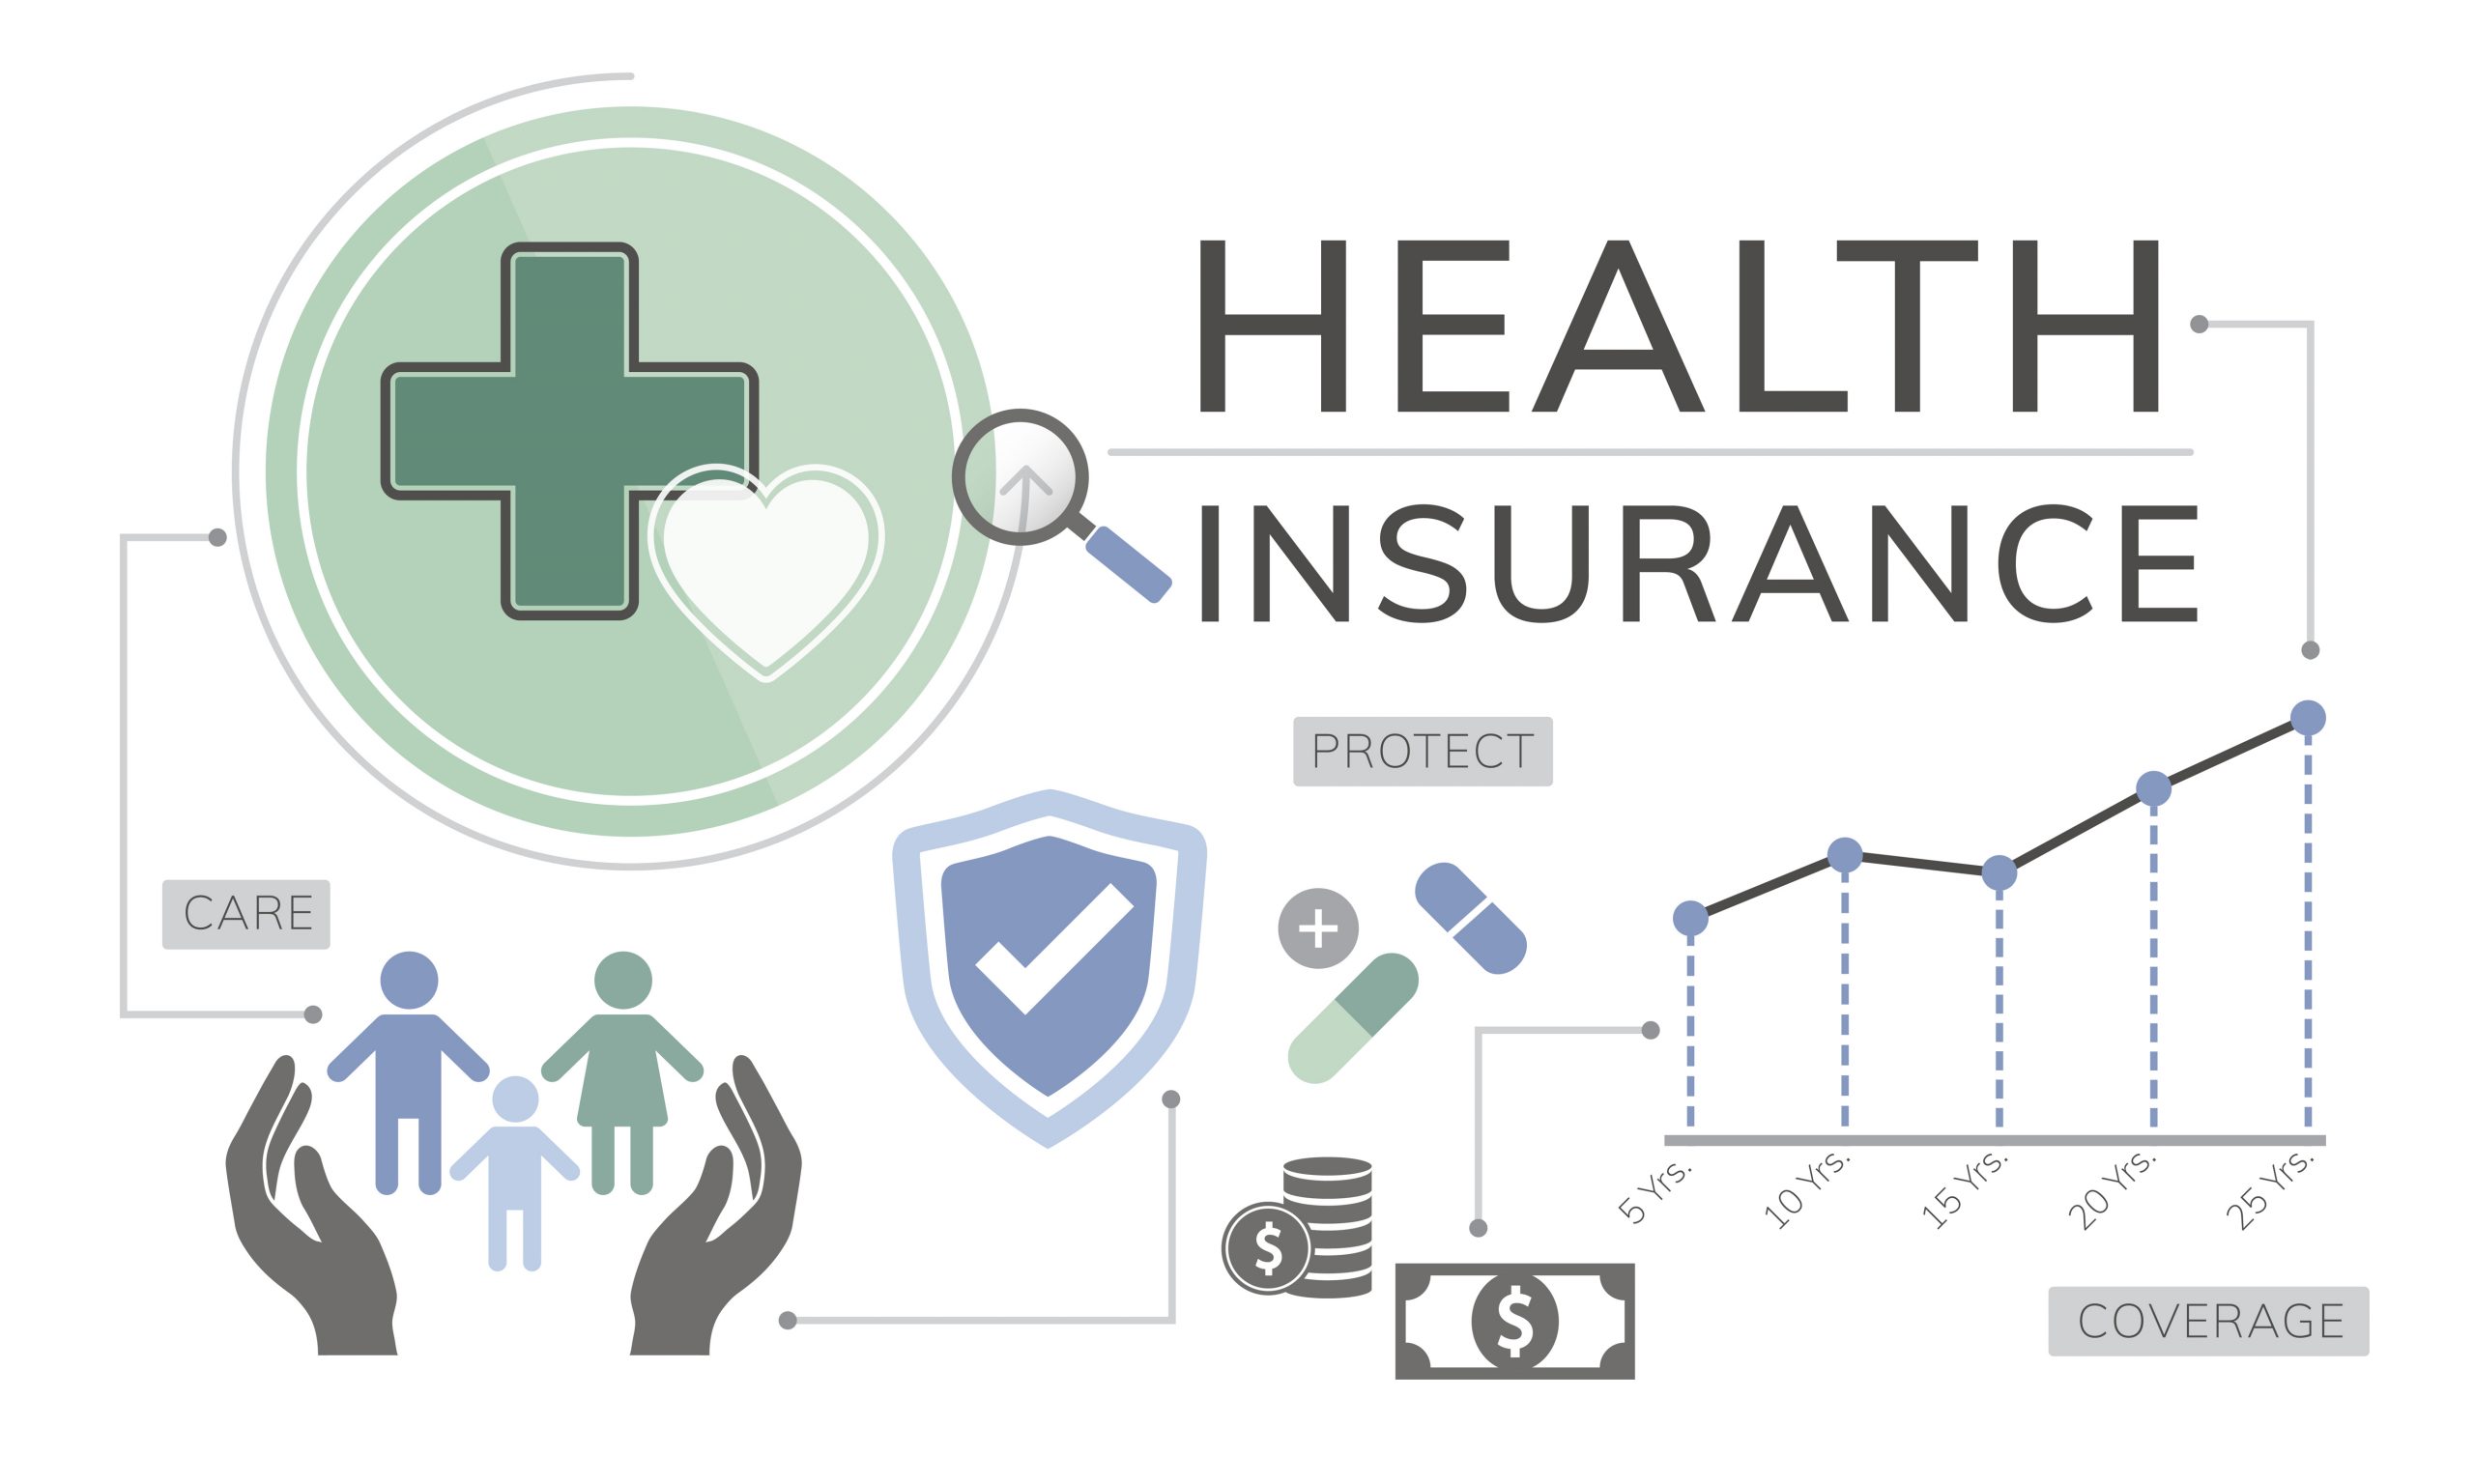 health insurance benefits